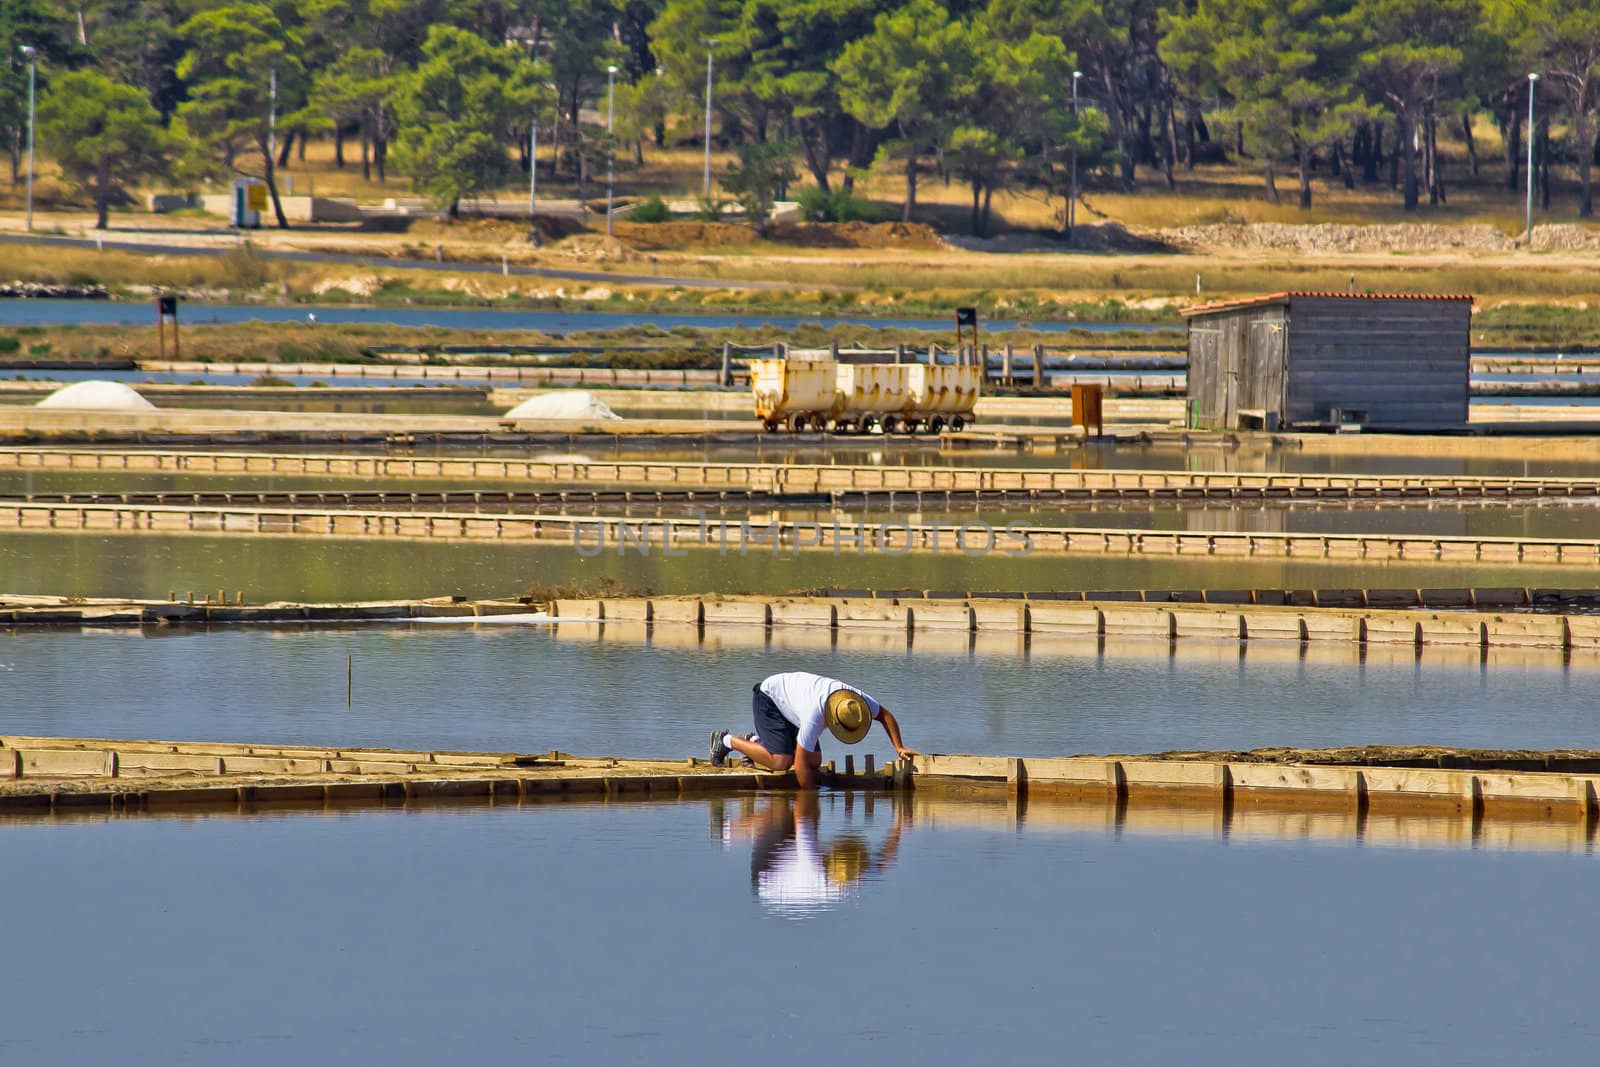 Salt evaporation ponds, production plant in Nin by xbrchx